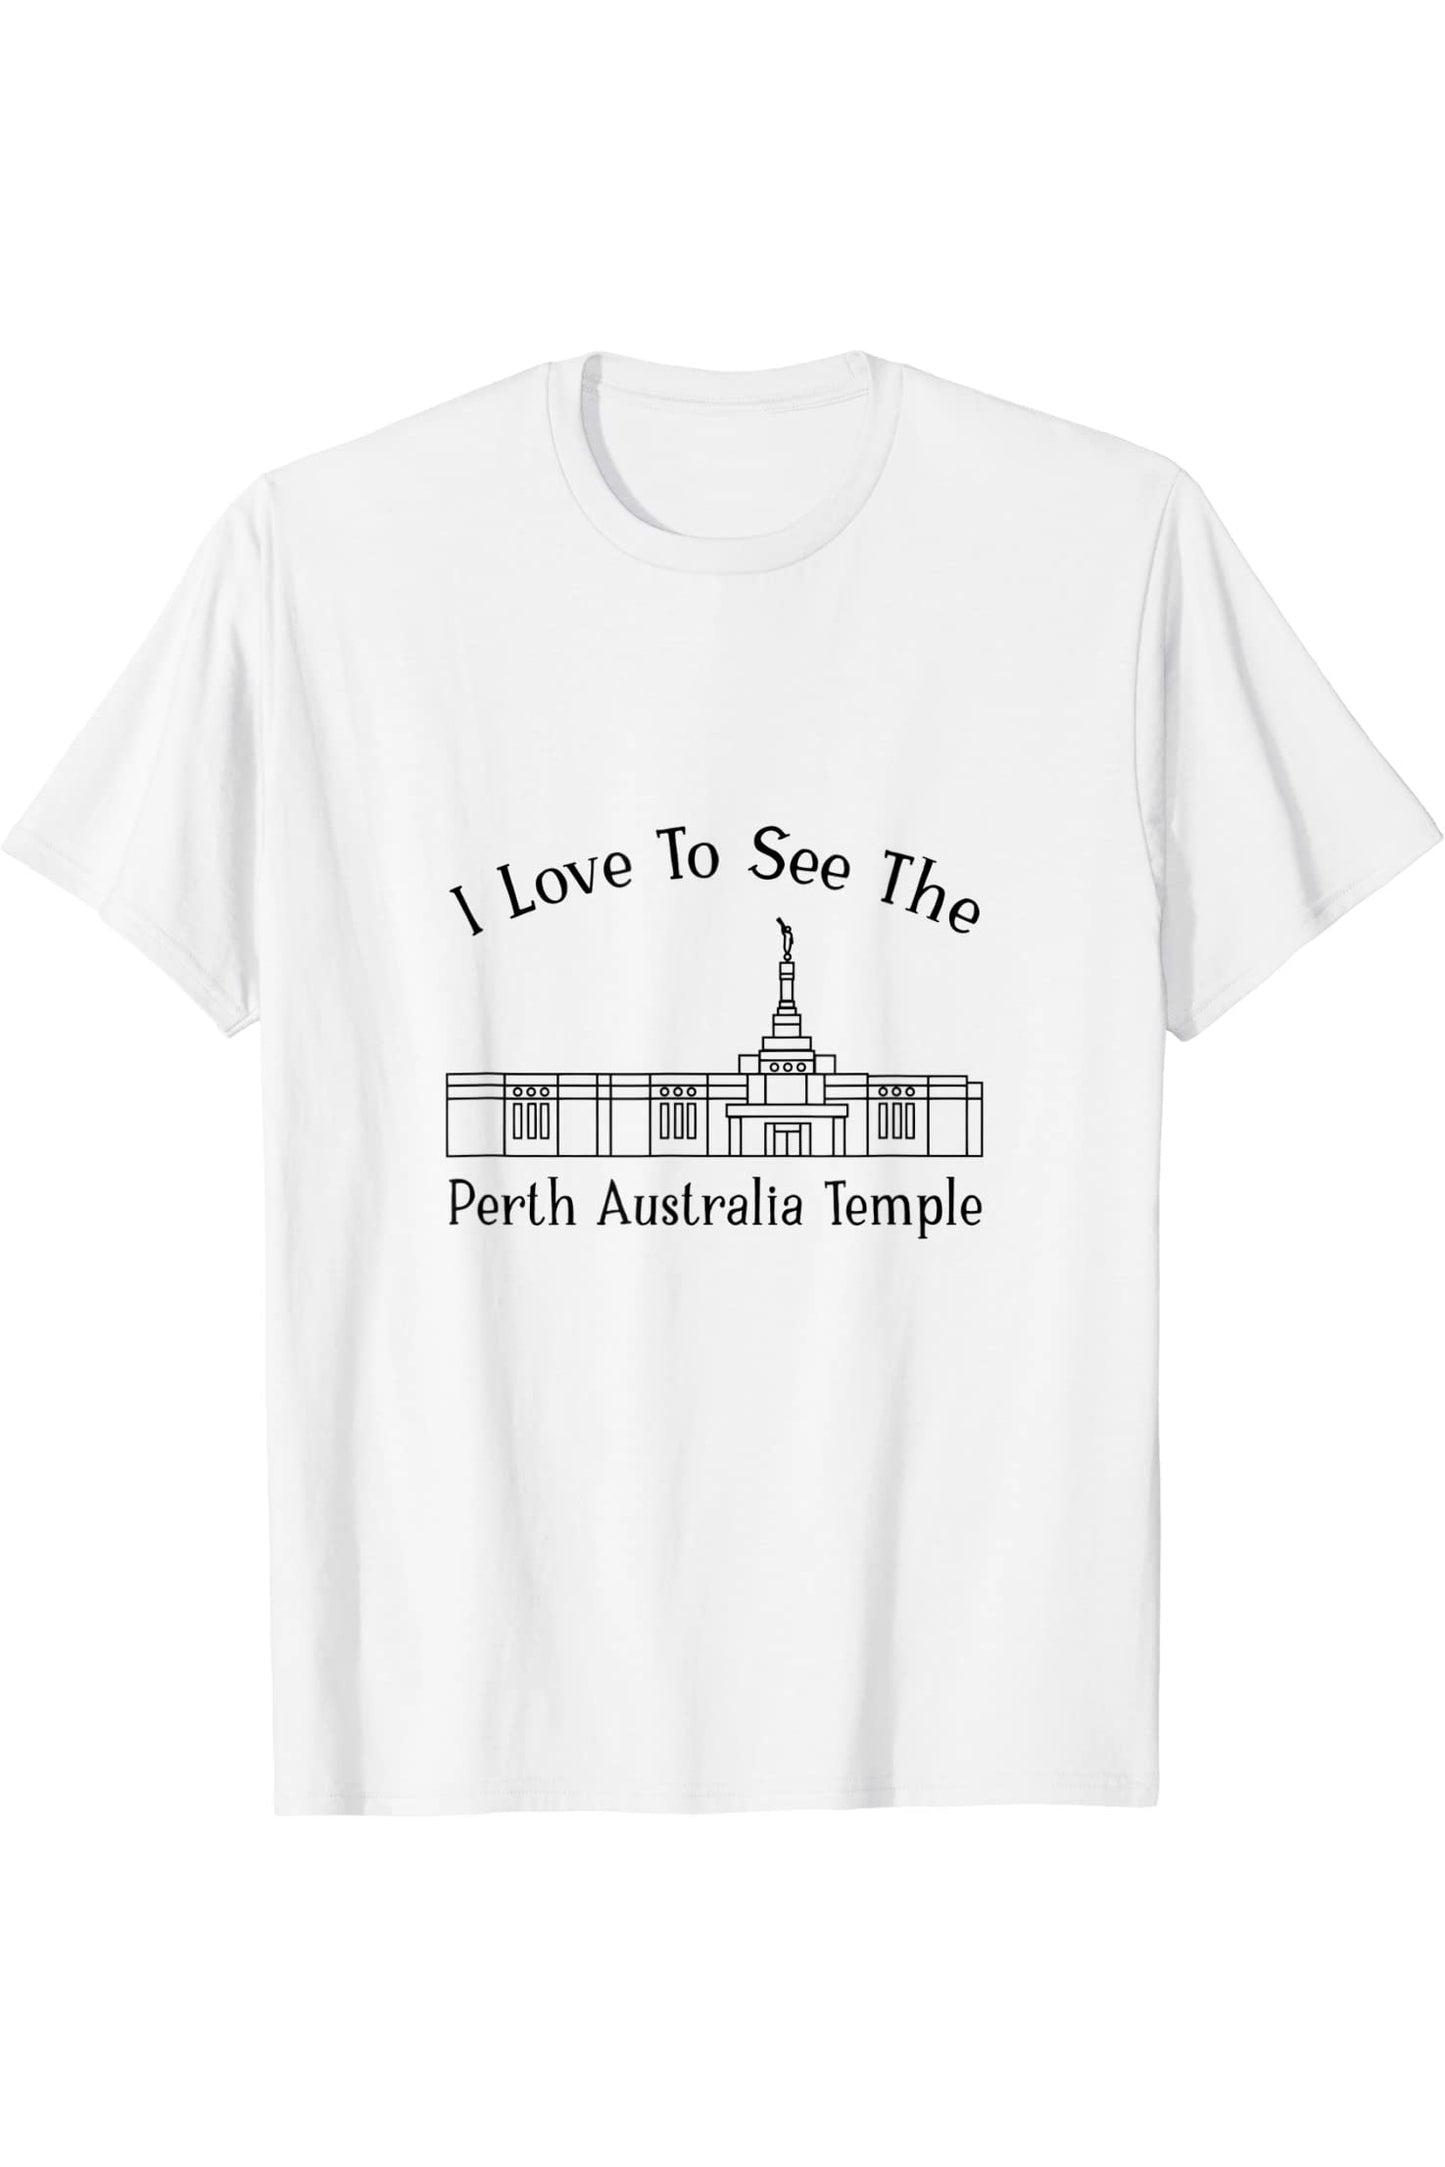 Perth Australia Temple T-Shirt - Happy Style (English) US